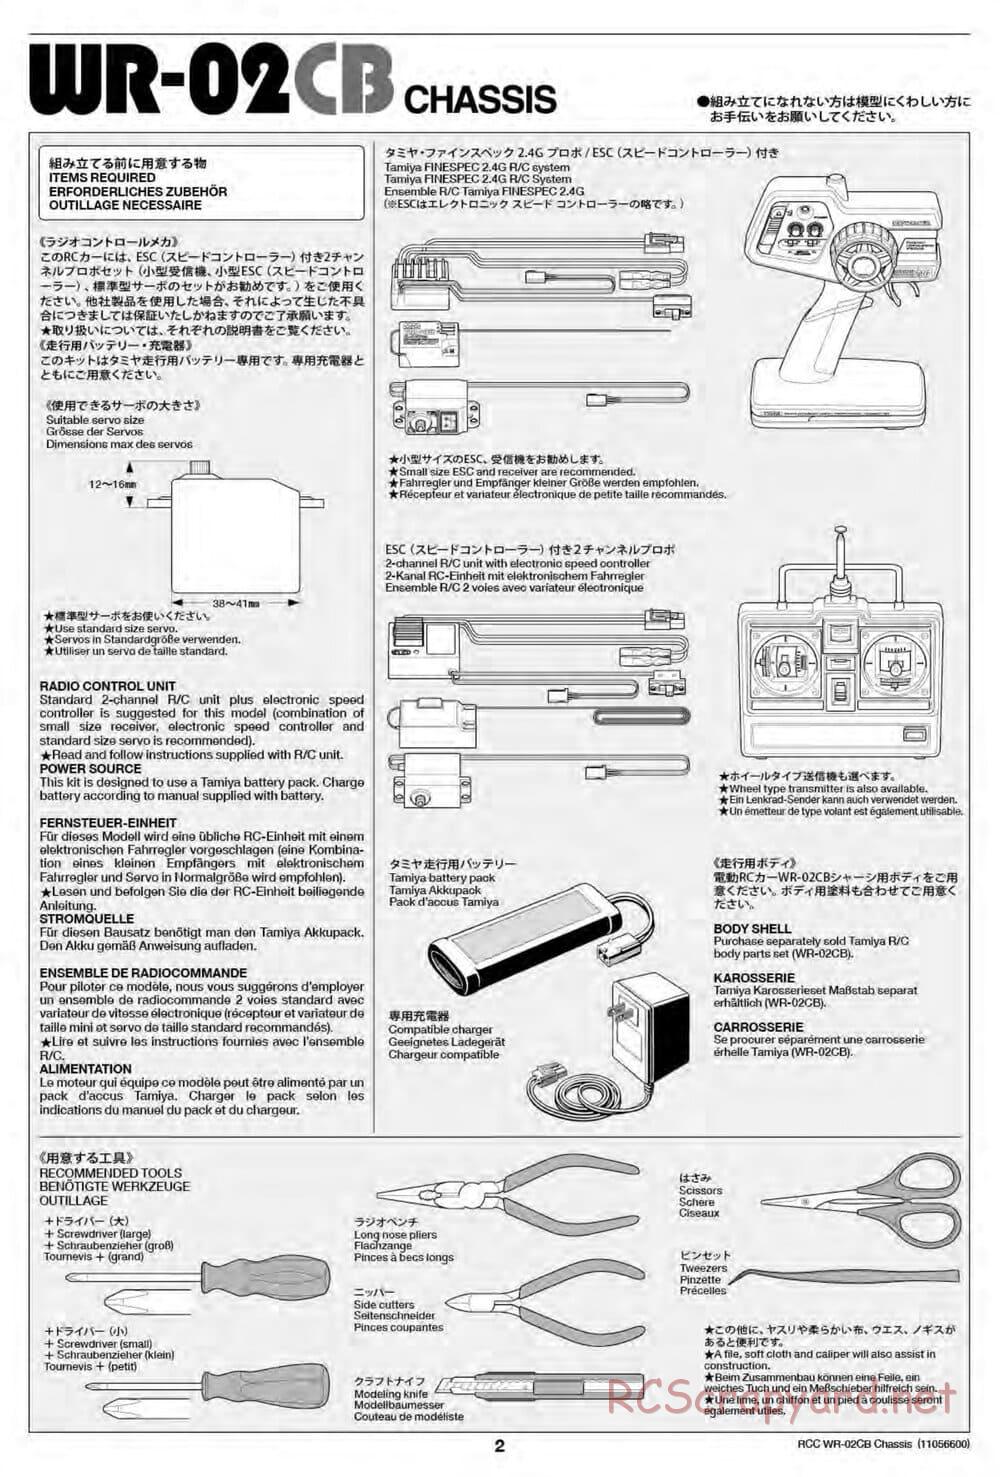 Tamiya - WR-02CB Chassis - Manual - Page 2